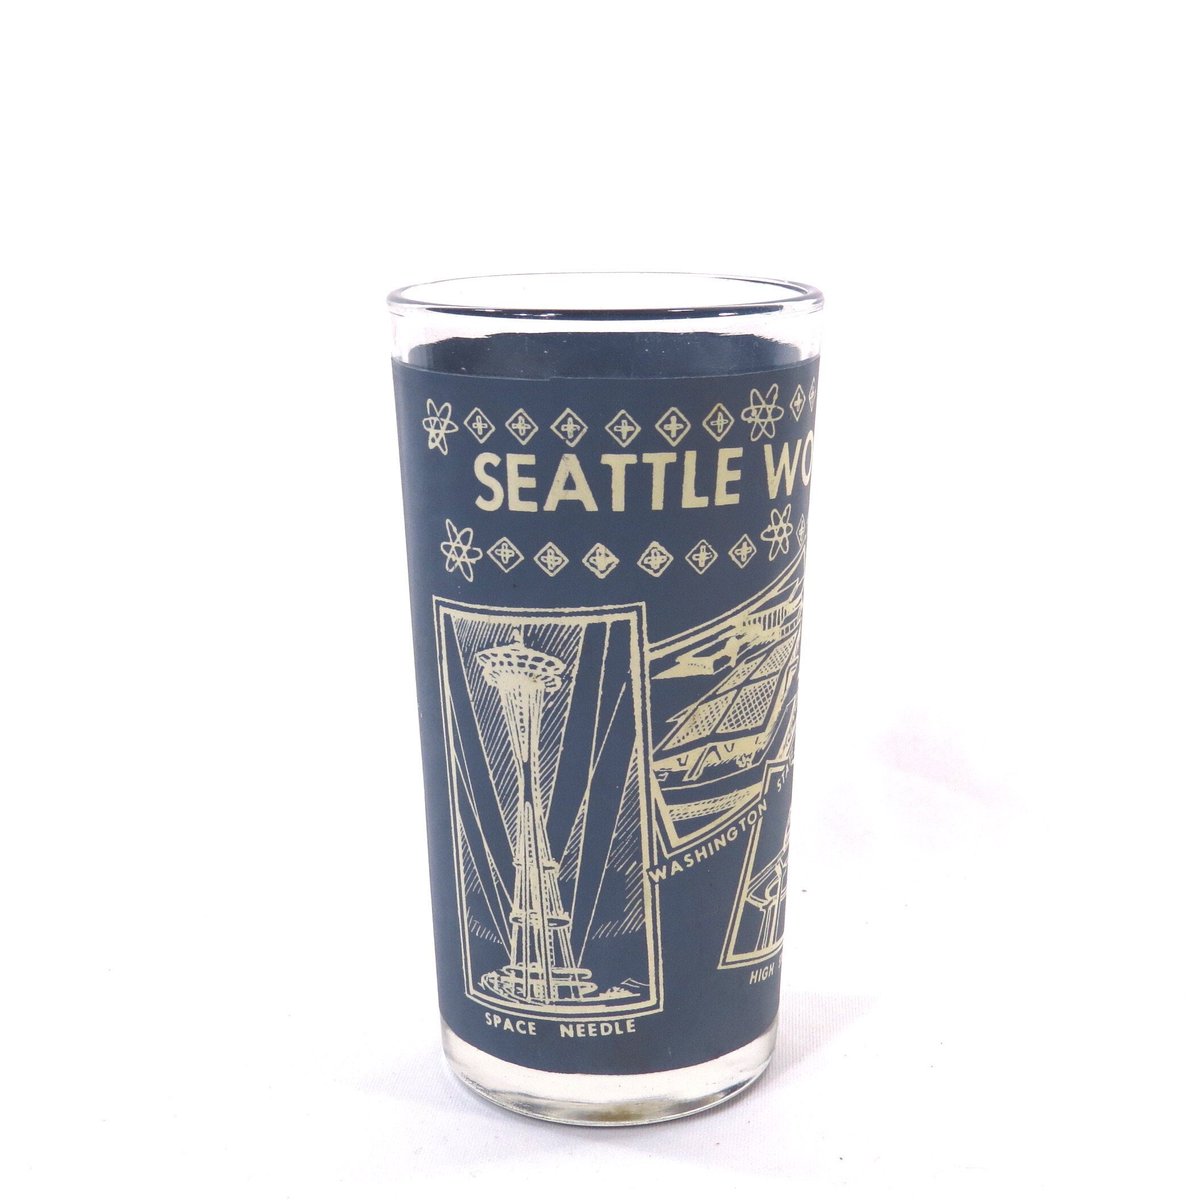 Vintage 1962 Seattle Worlds Fair Souvenir Drink Glass etsy.me/3JsiQcN #midcentury #worldsfair #seattle #1962s #spaceneedle #monorail #souvenirglass #drinkingglass #mcmbarware #etsy